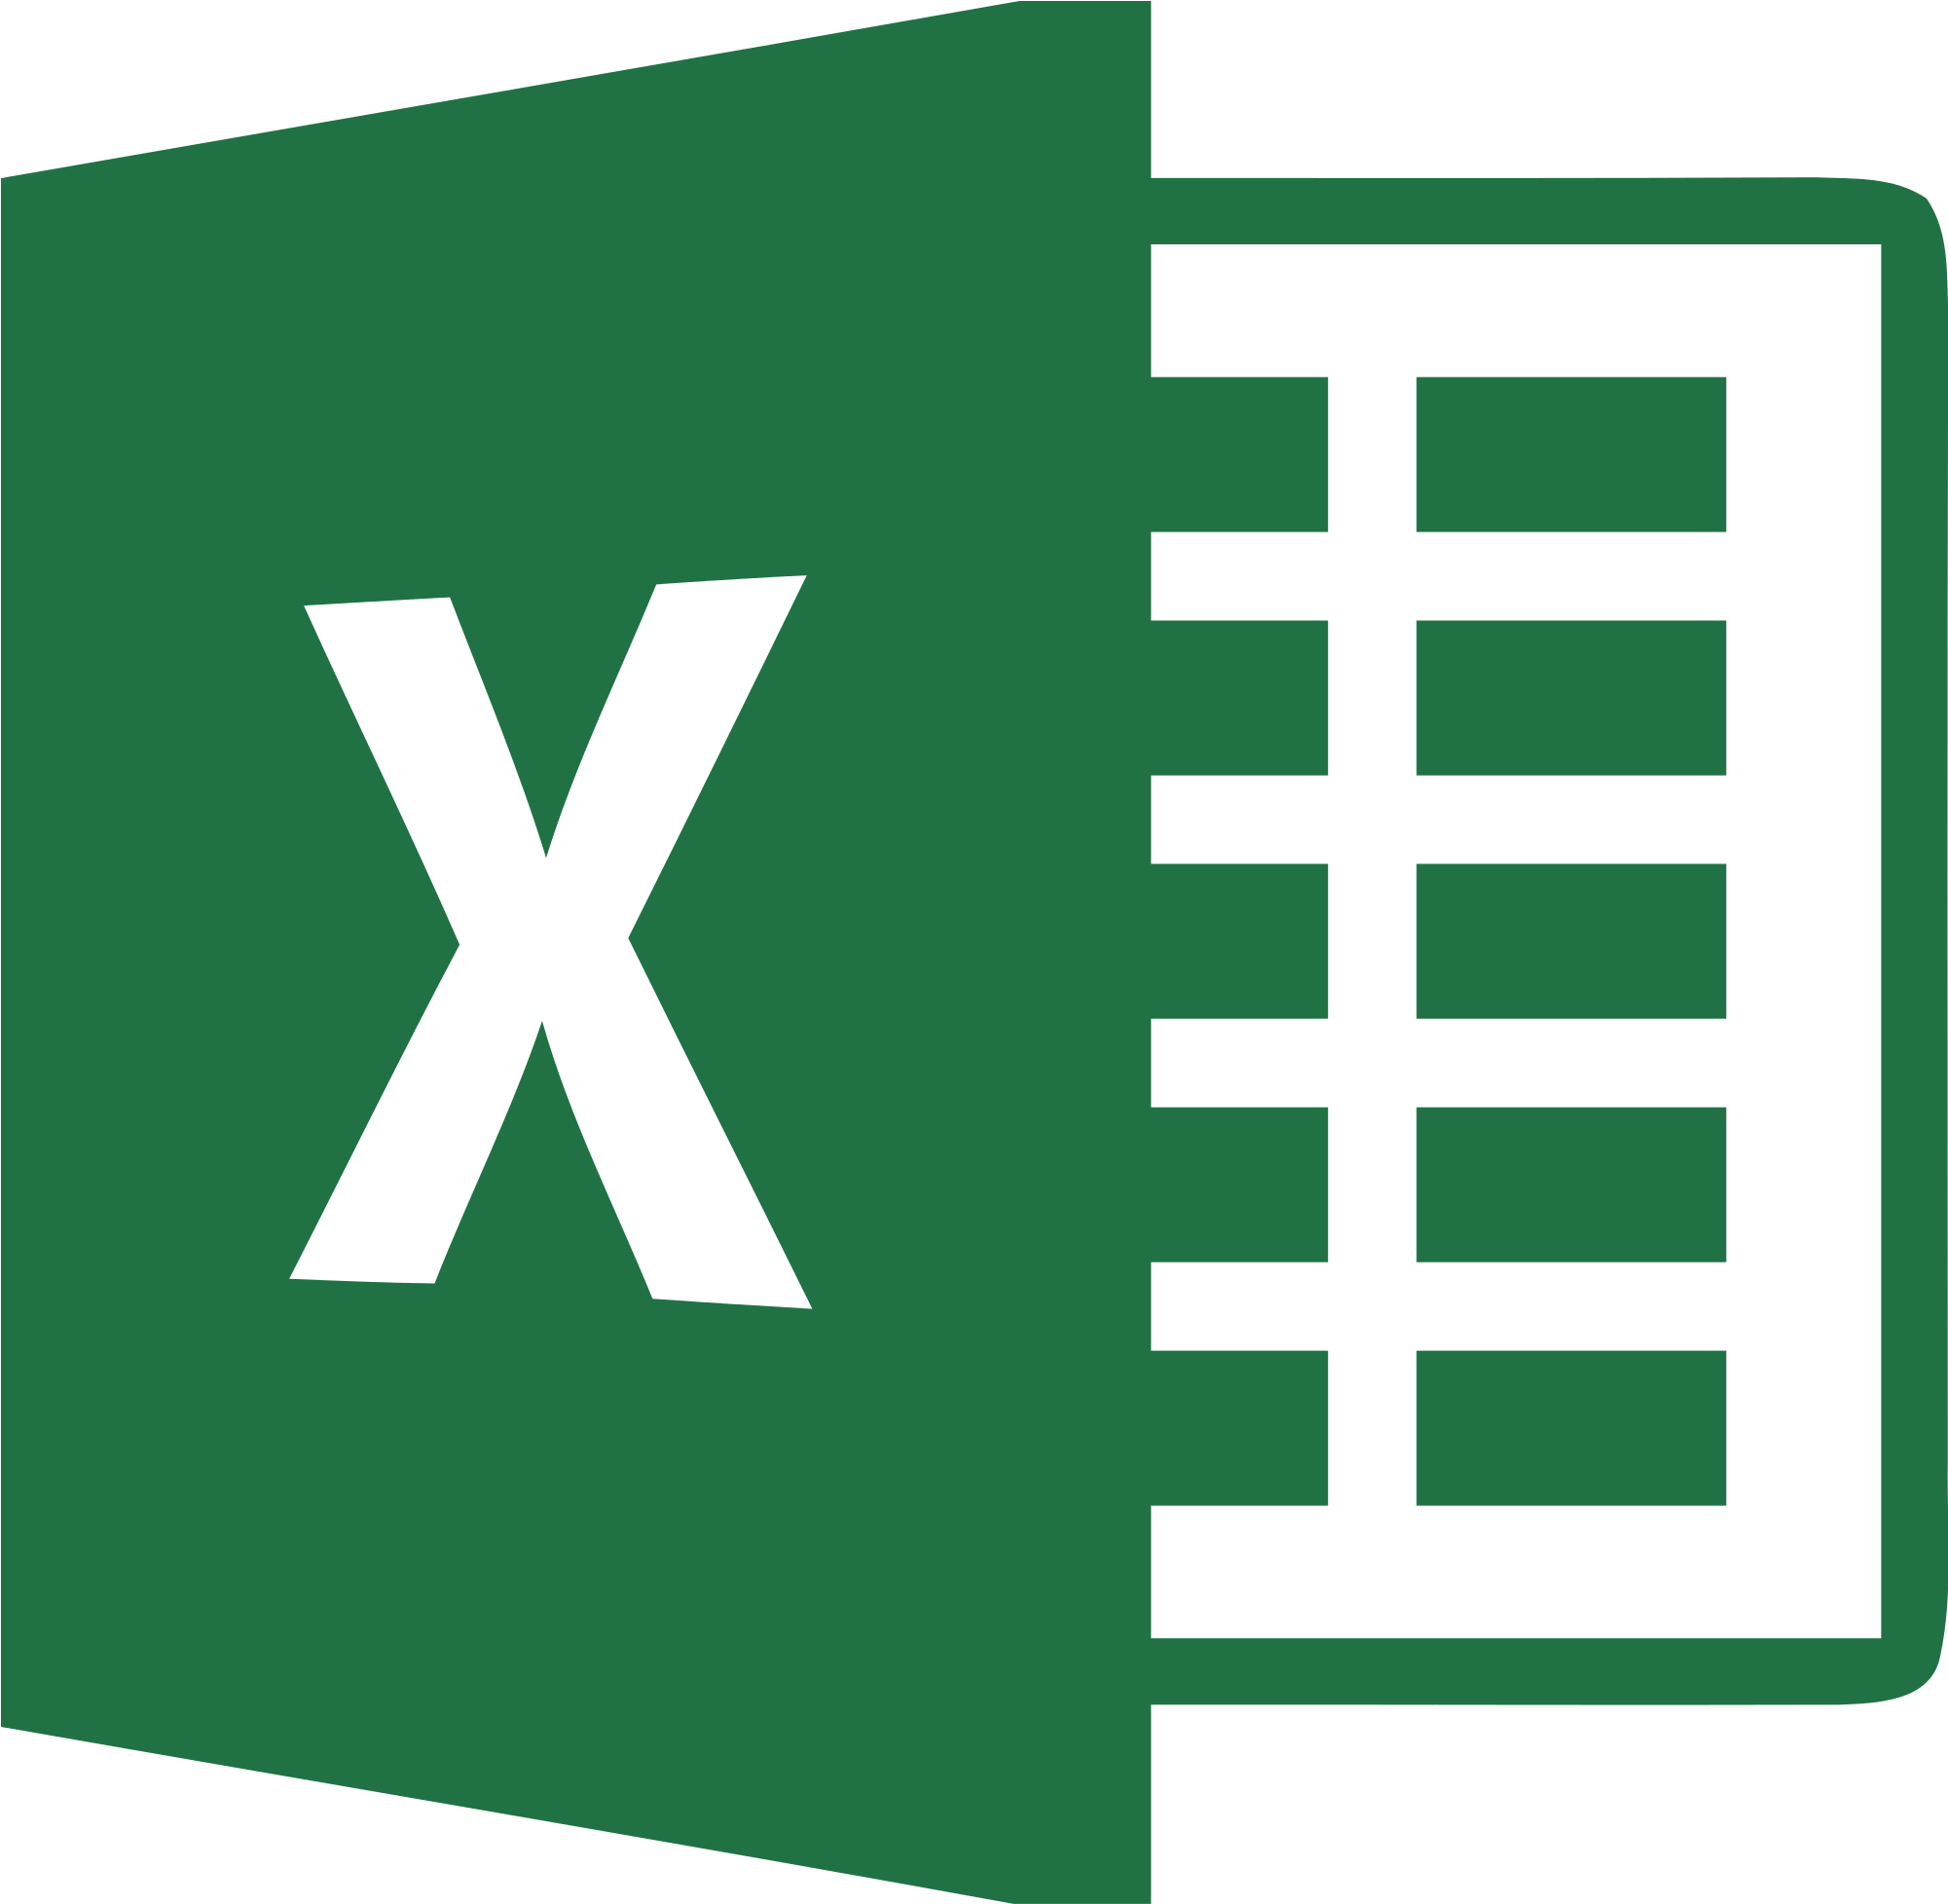 Microsoft® Office Excel® - Microsoft Excel Logo 2013 (2000x1964)